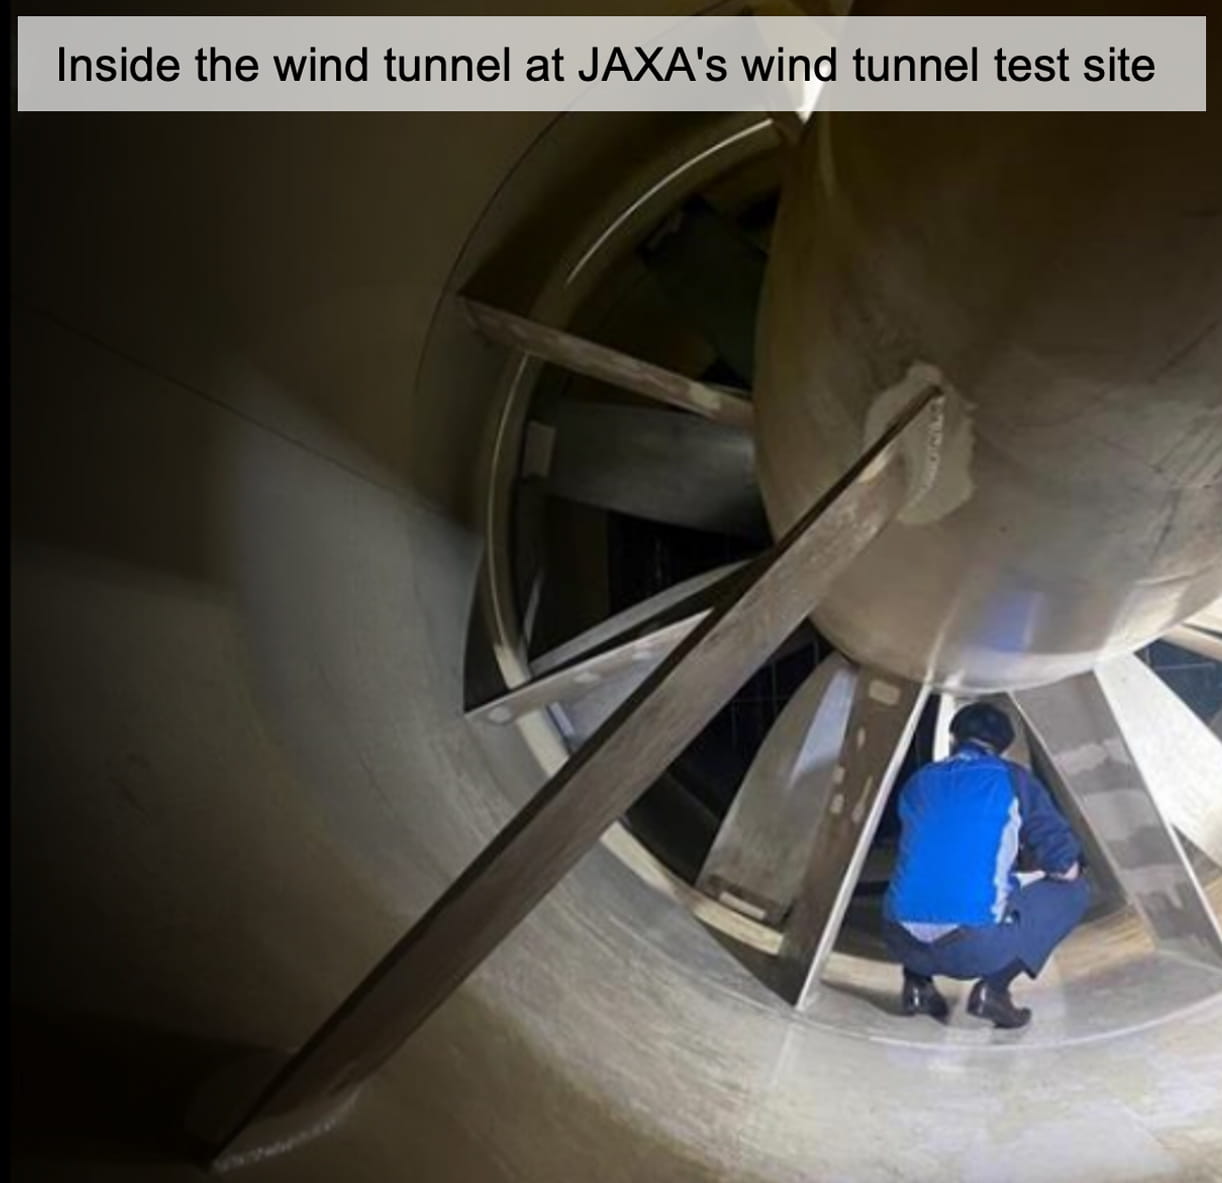 Inside the wind tunnel at JAXA's wind tunnel test site